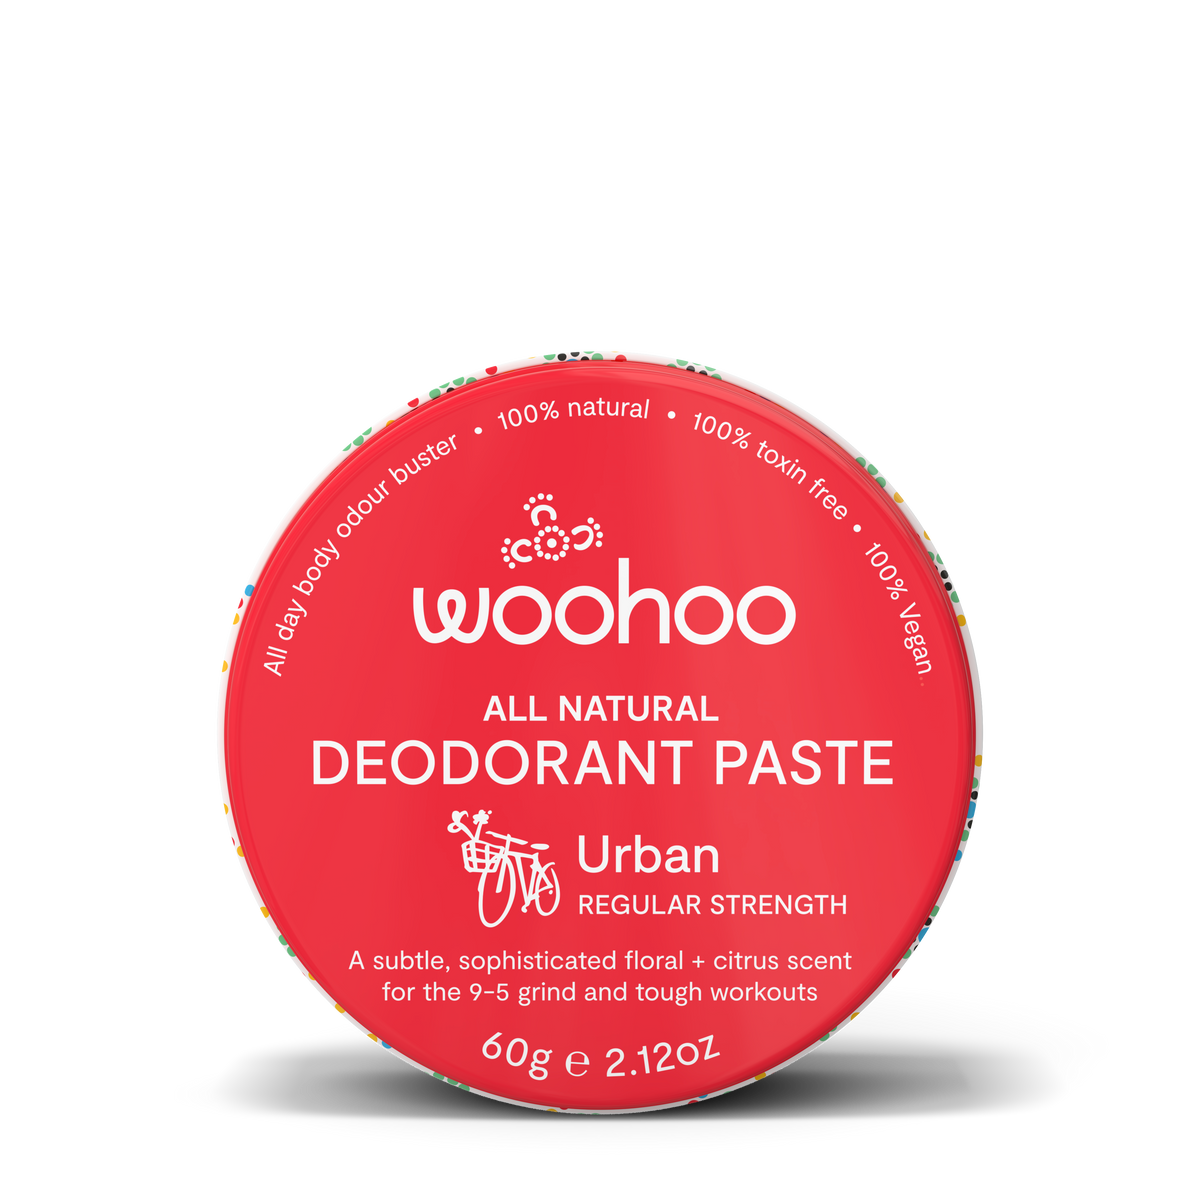 Woohoo All Natural Deodorant Paste (Urban) 60g